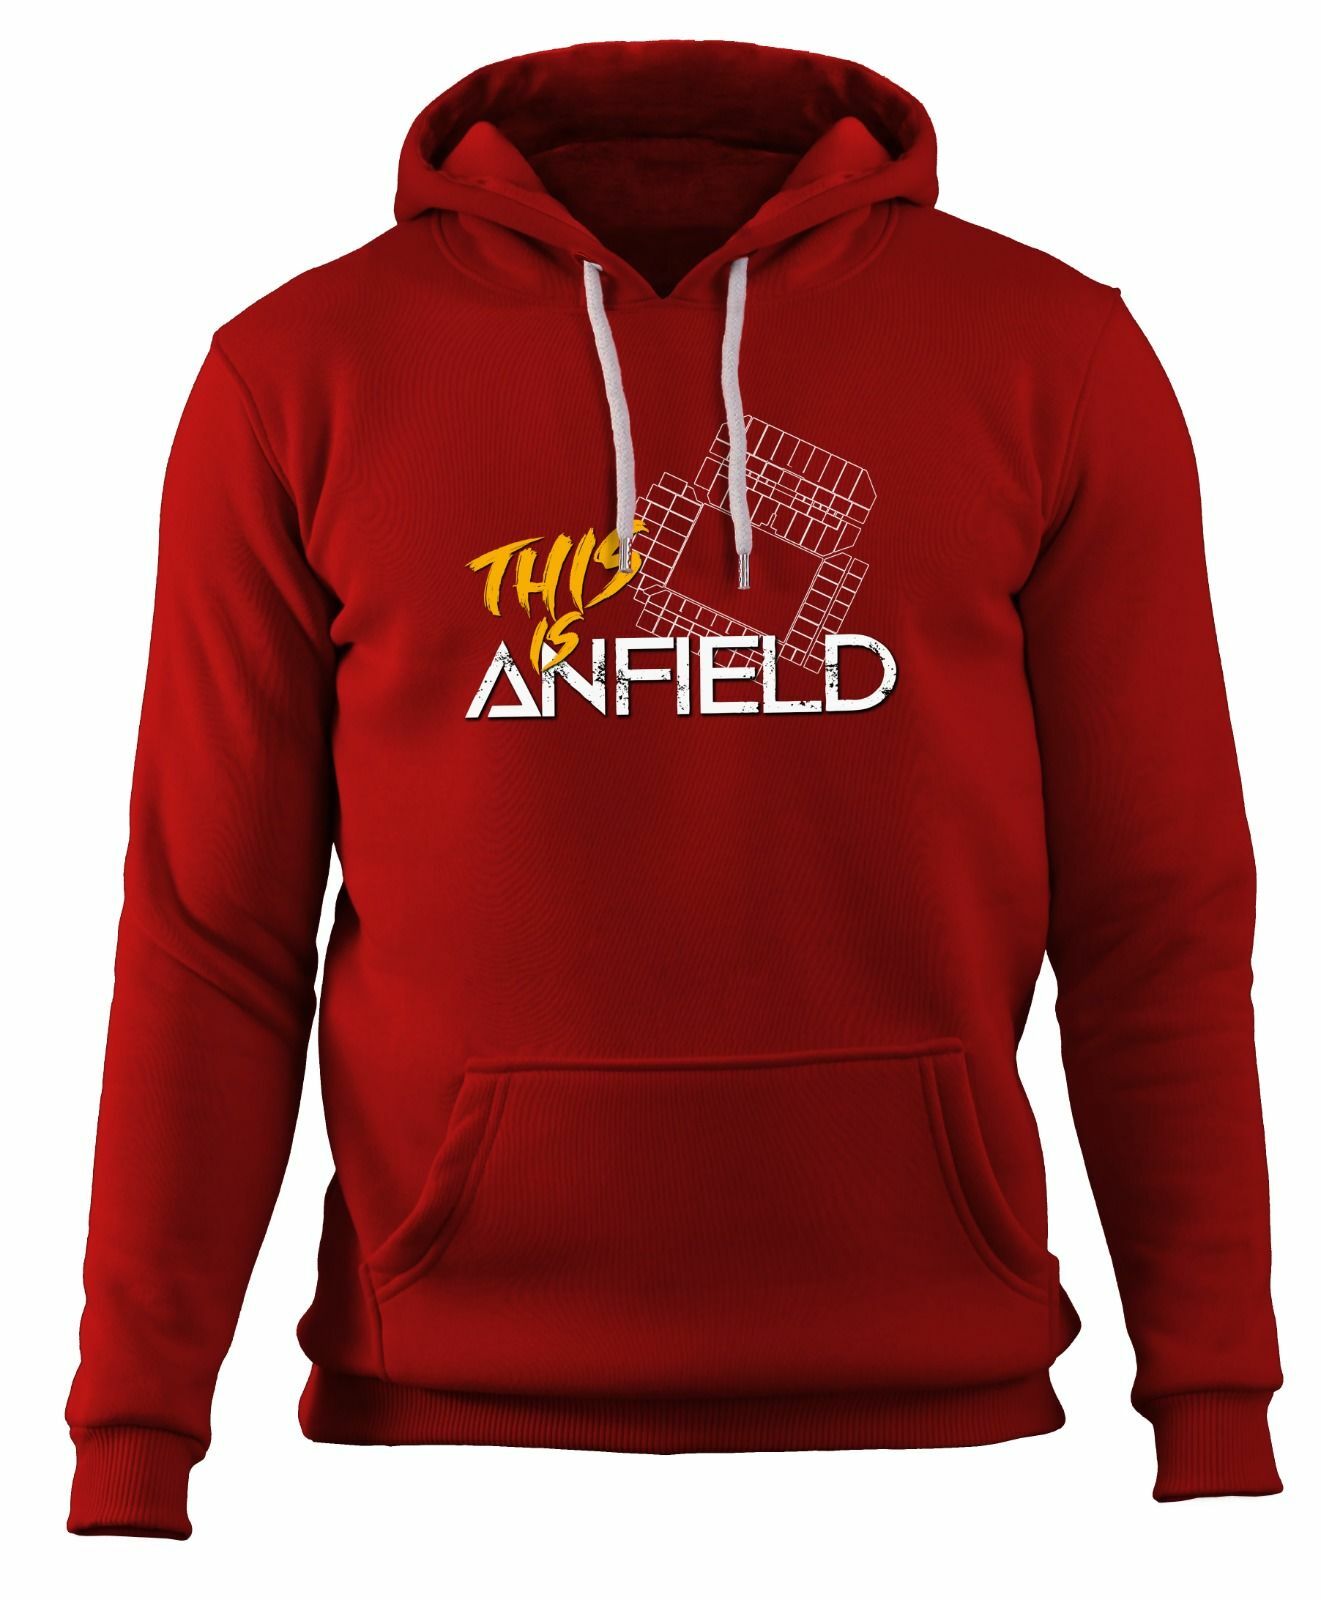 Liverpool - This is Anfield! Sweatshirt